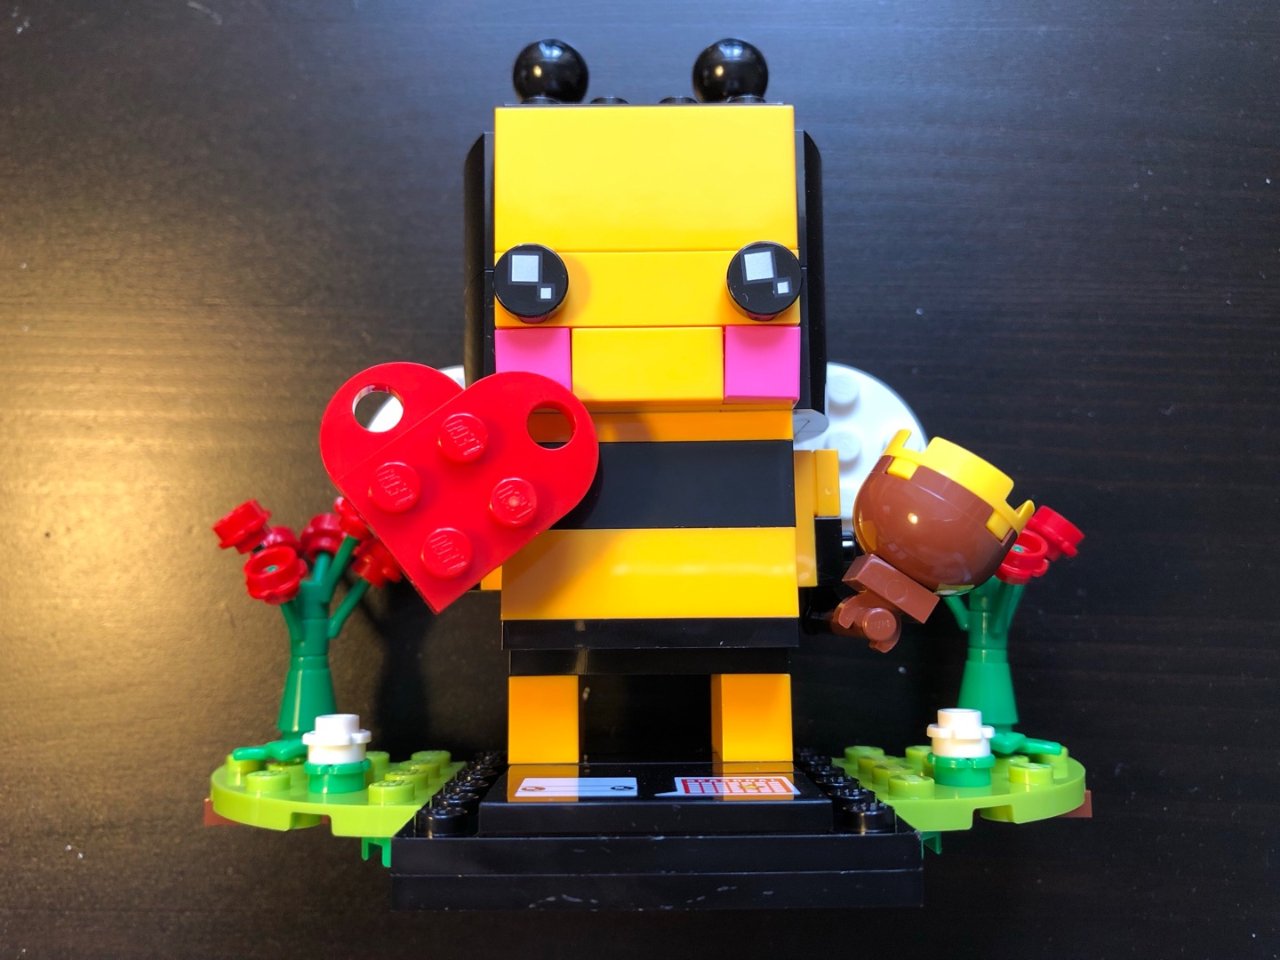 Lego 乐高,6.99英镑